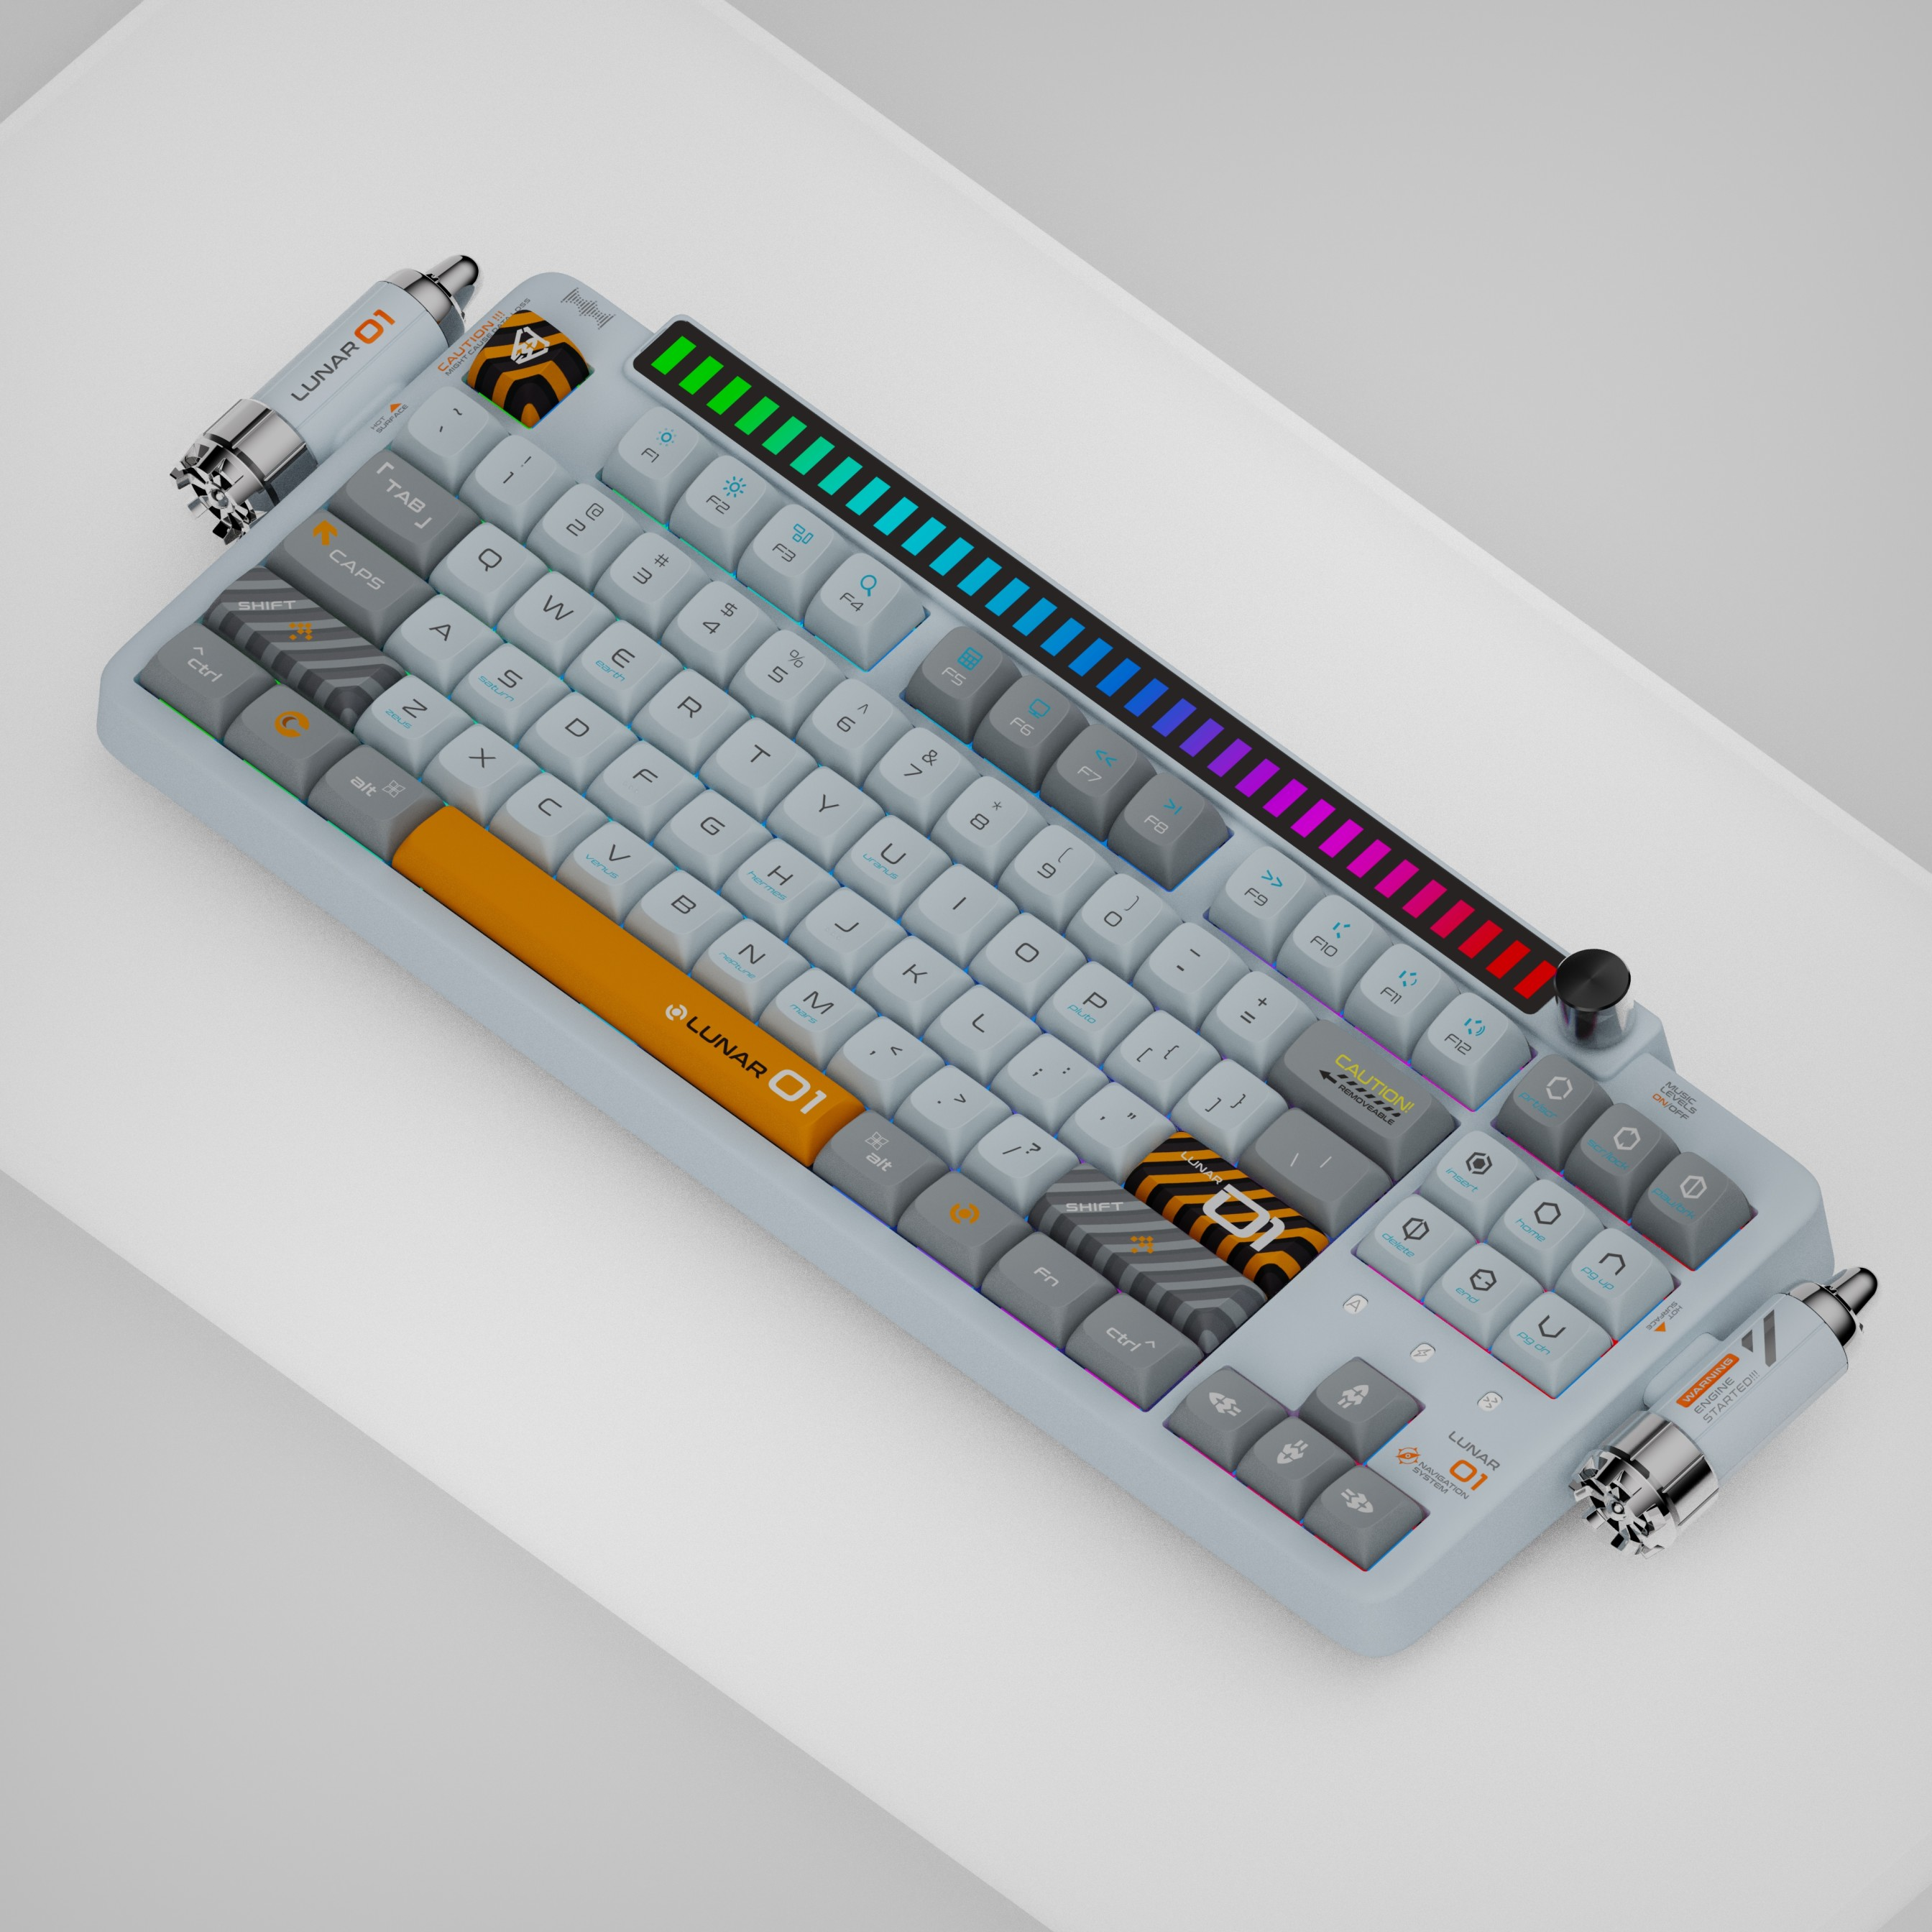 KeysMe Keyboards